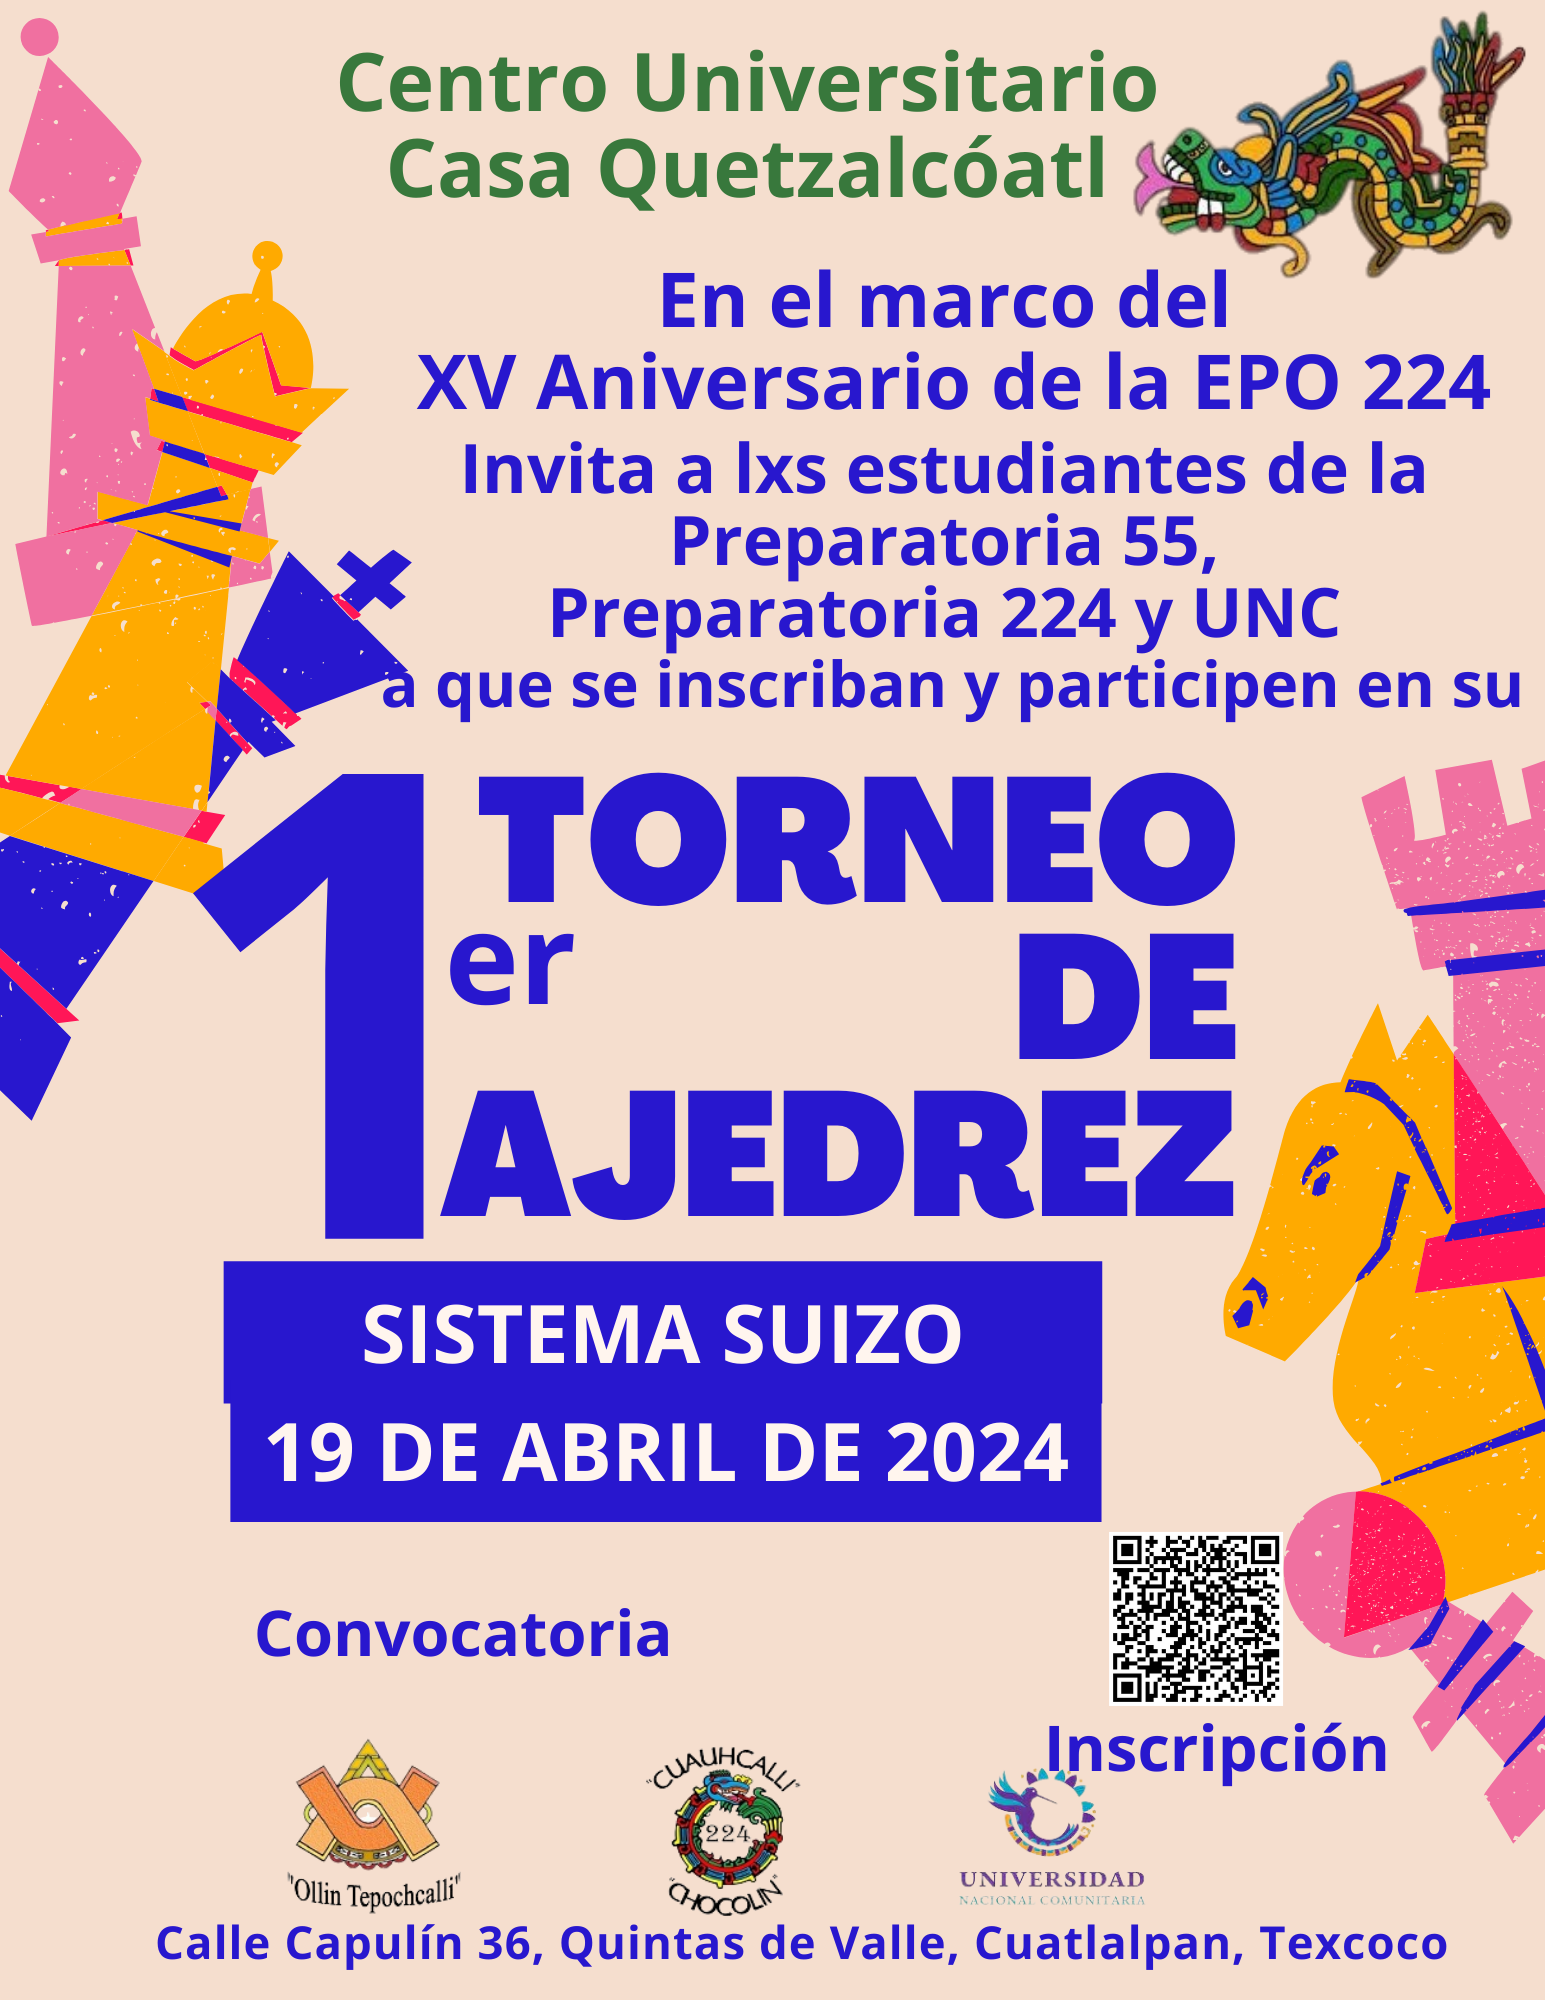 Centro Universitario Casa Quetzalcóatl invita a torneo de Ajedrez